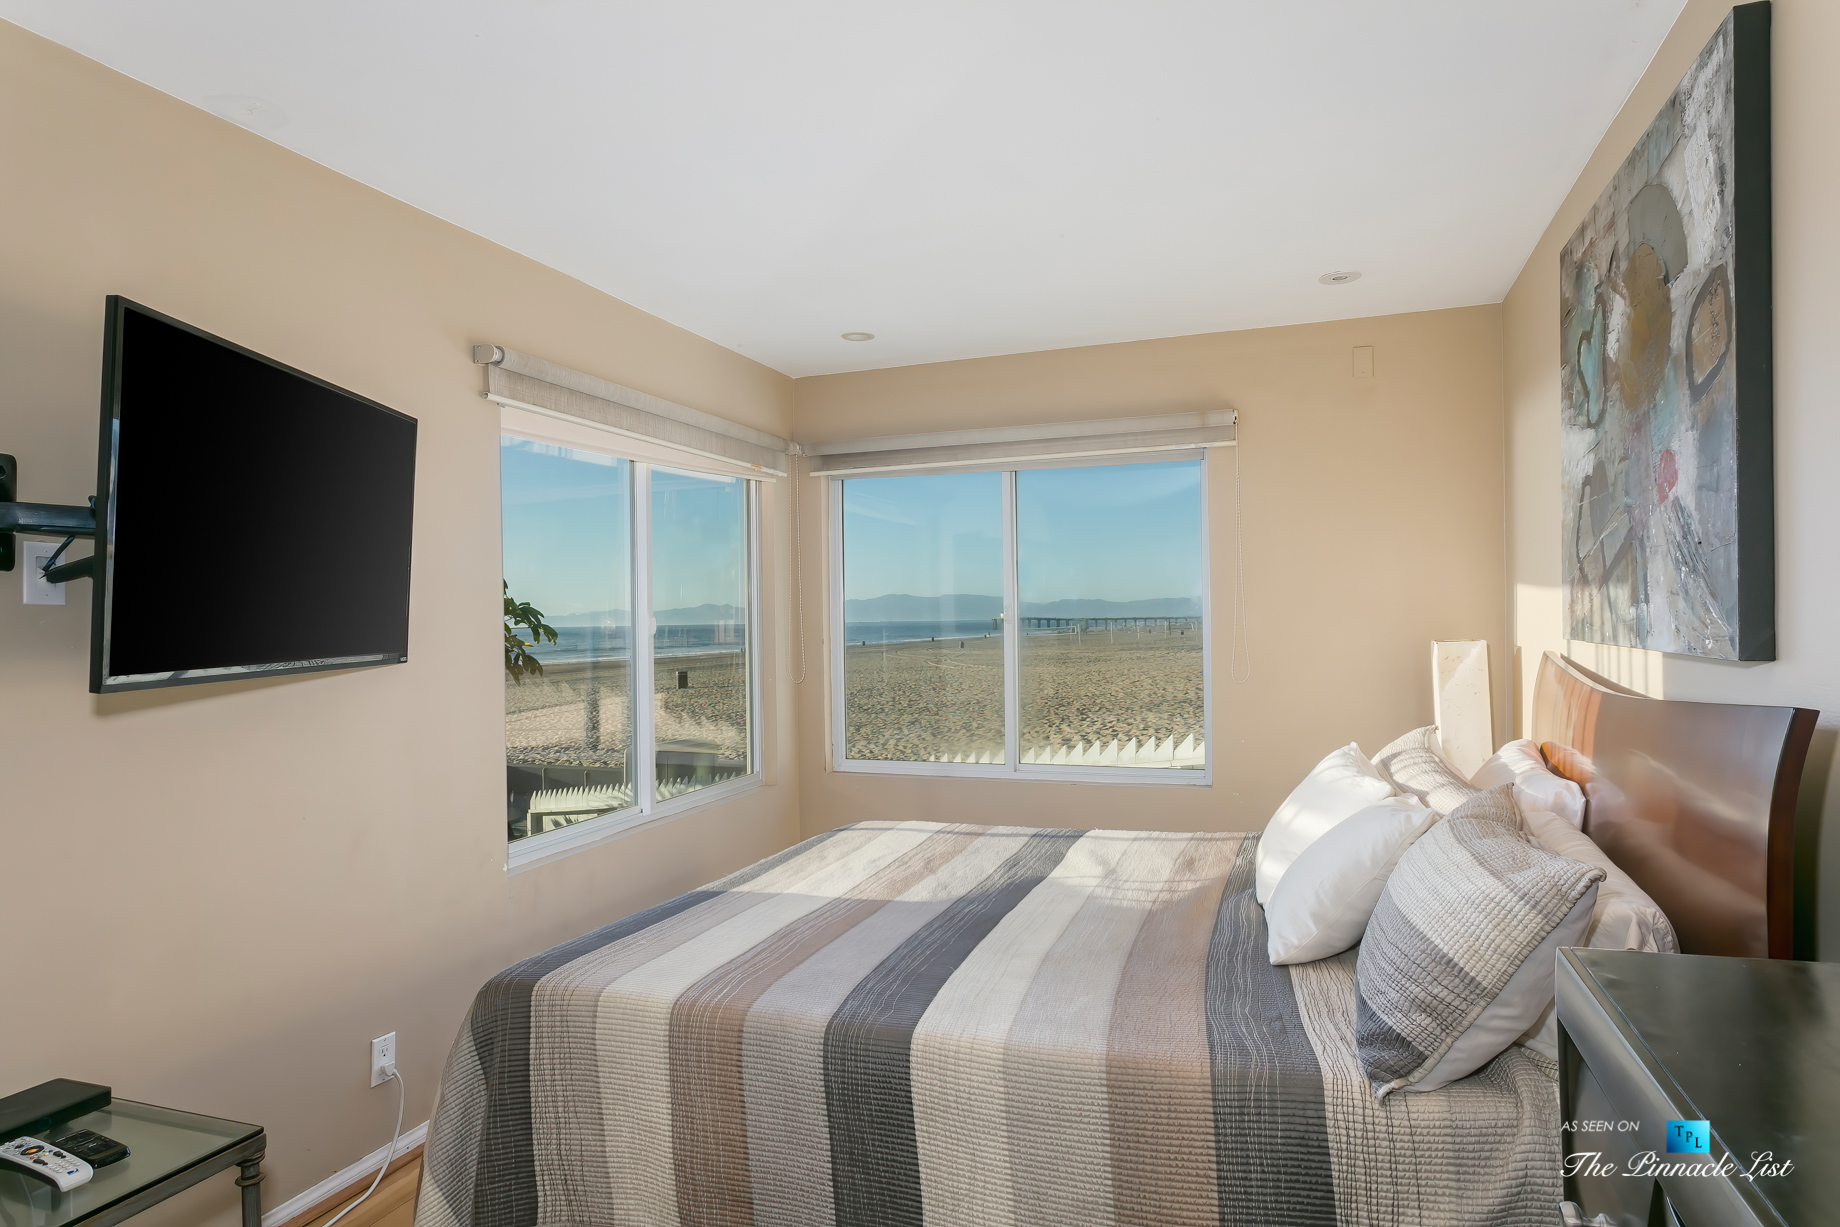 3500 The Strand, Hermosa Beach, CA, USA – Bedroom – Luxury Real Estate – Original 90210 Beach House – Oceanfront Home